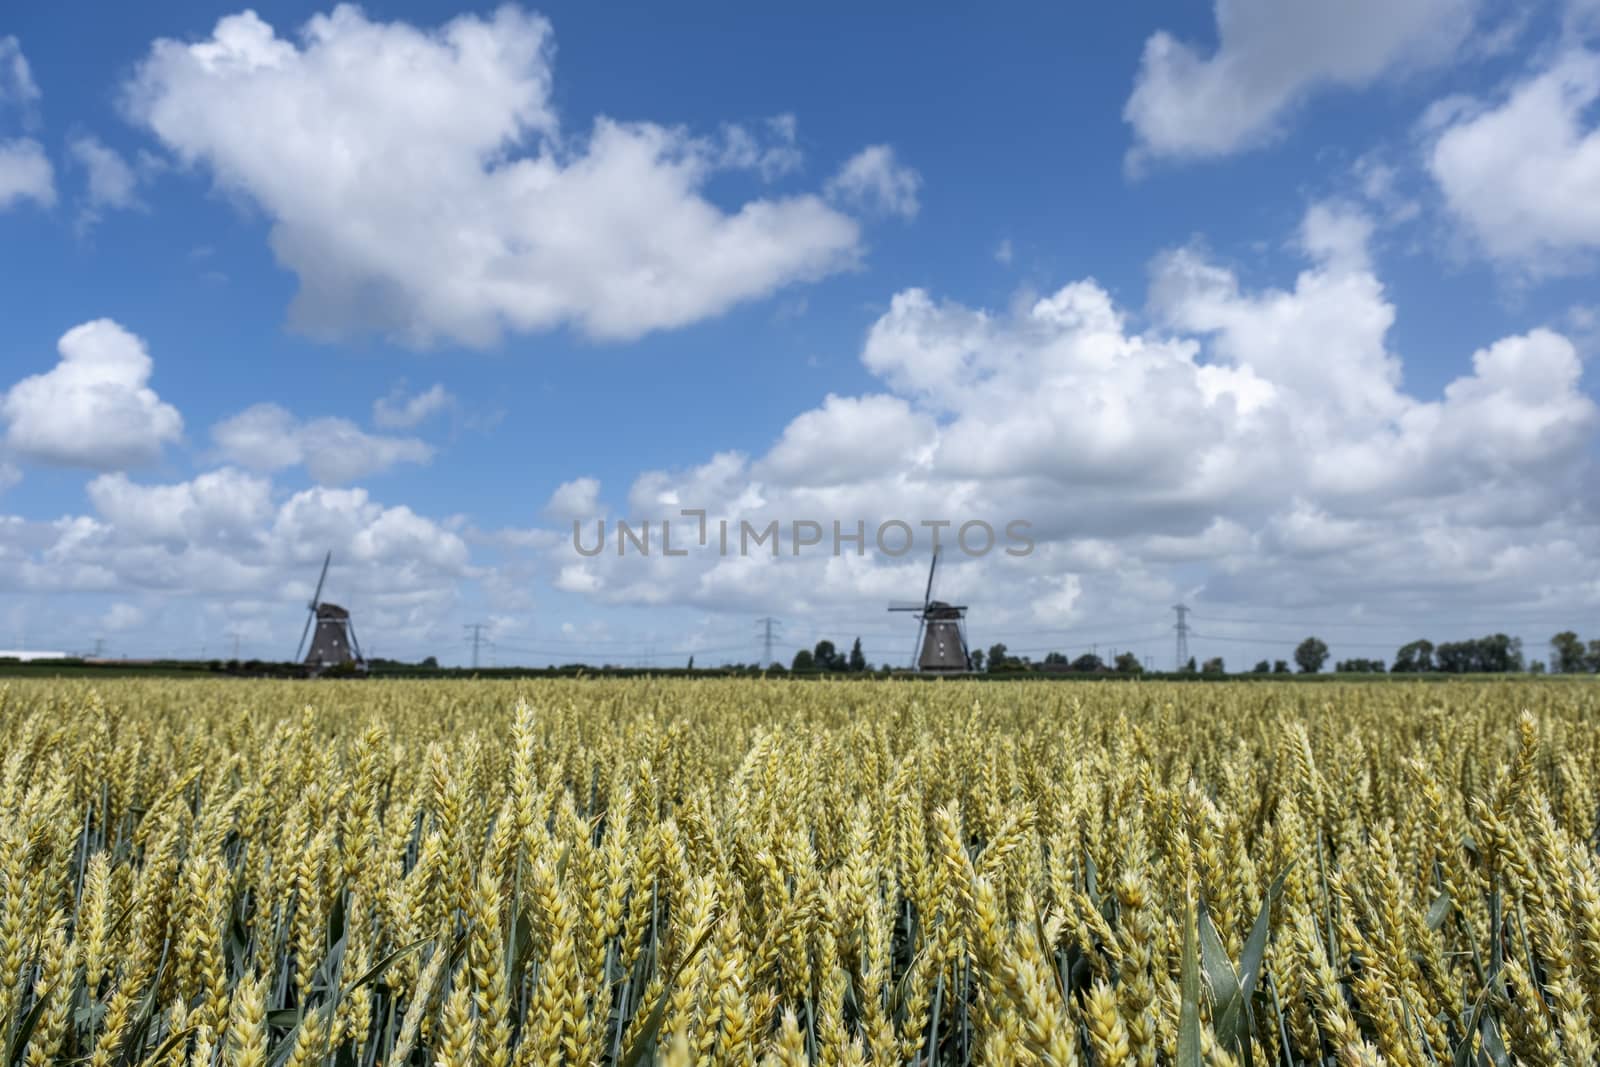 Wheat field ready for harvest under a blue summer sky. Netherlands by Tjeerdkruse